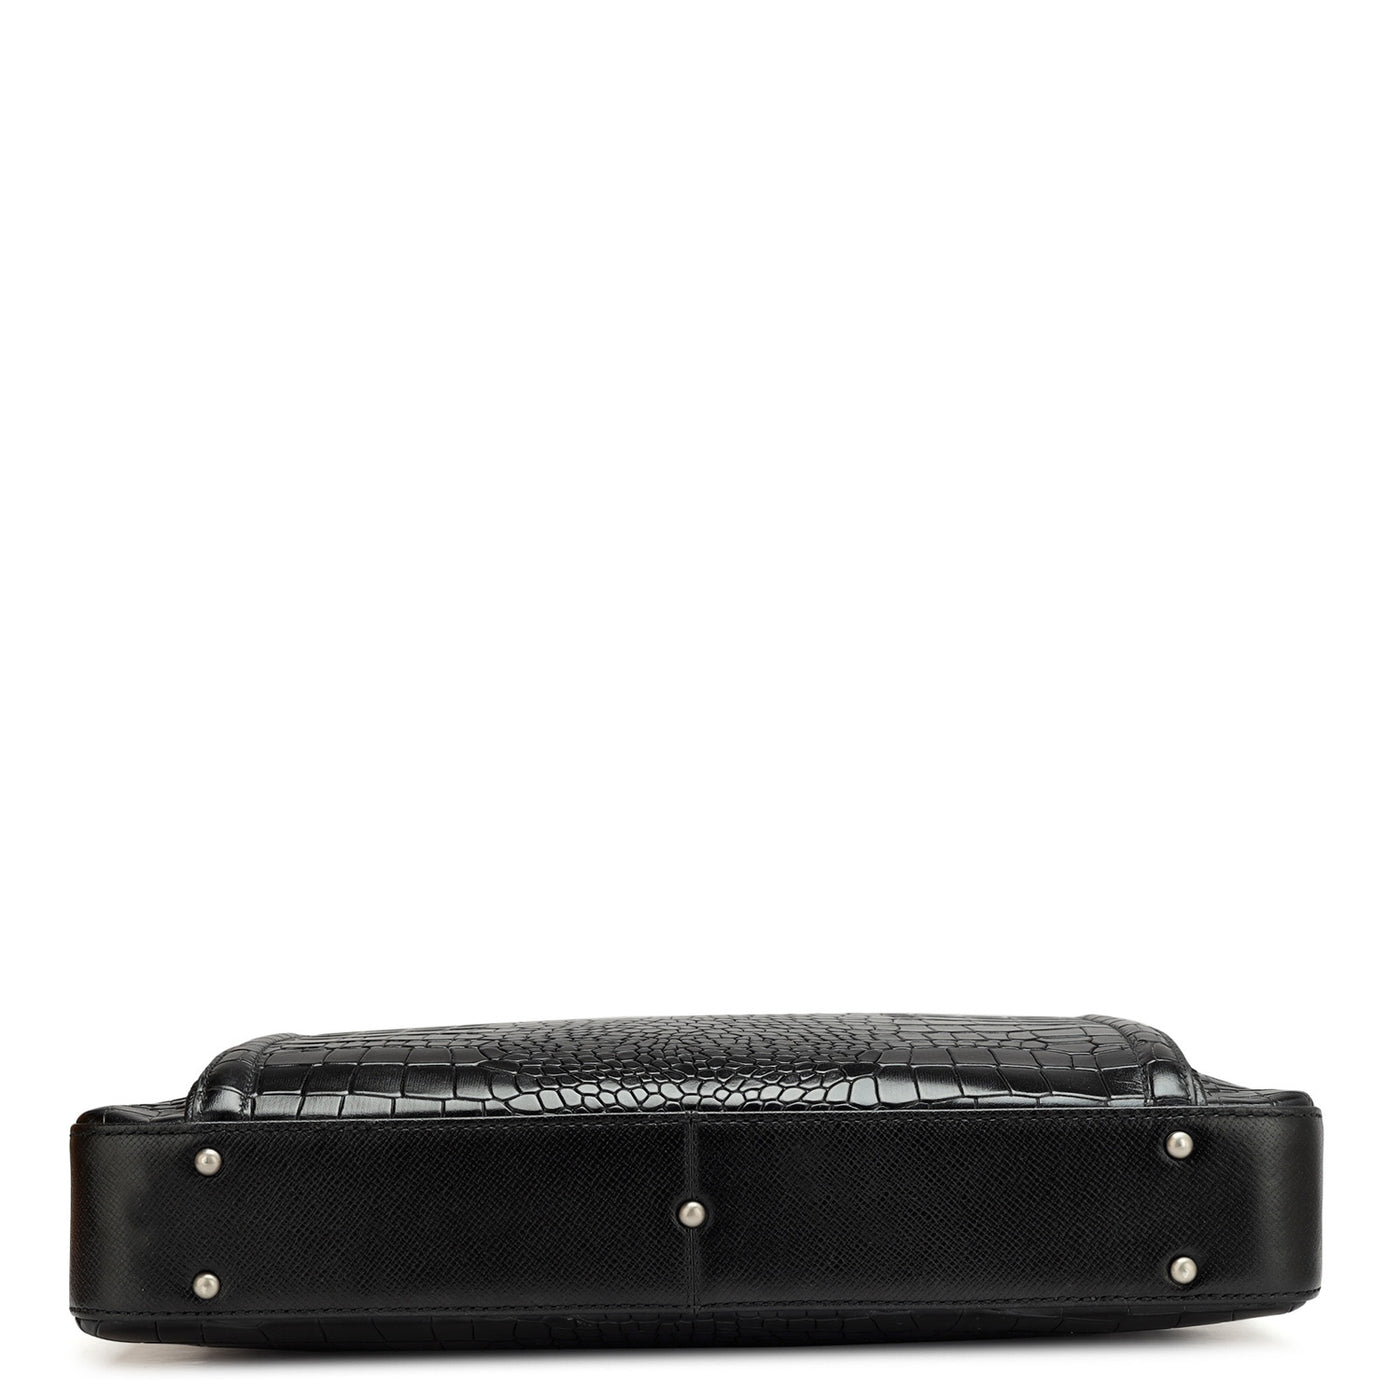 Black Croco Leather Laptop Bag - Upto 14"